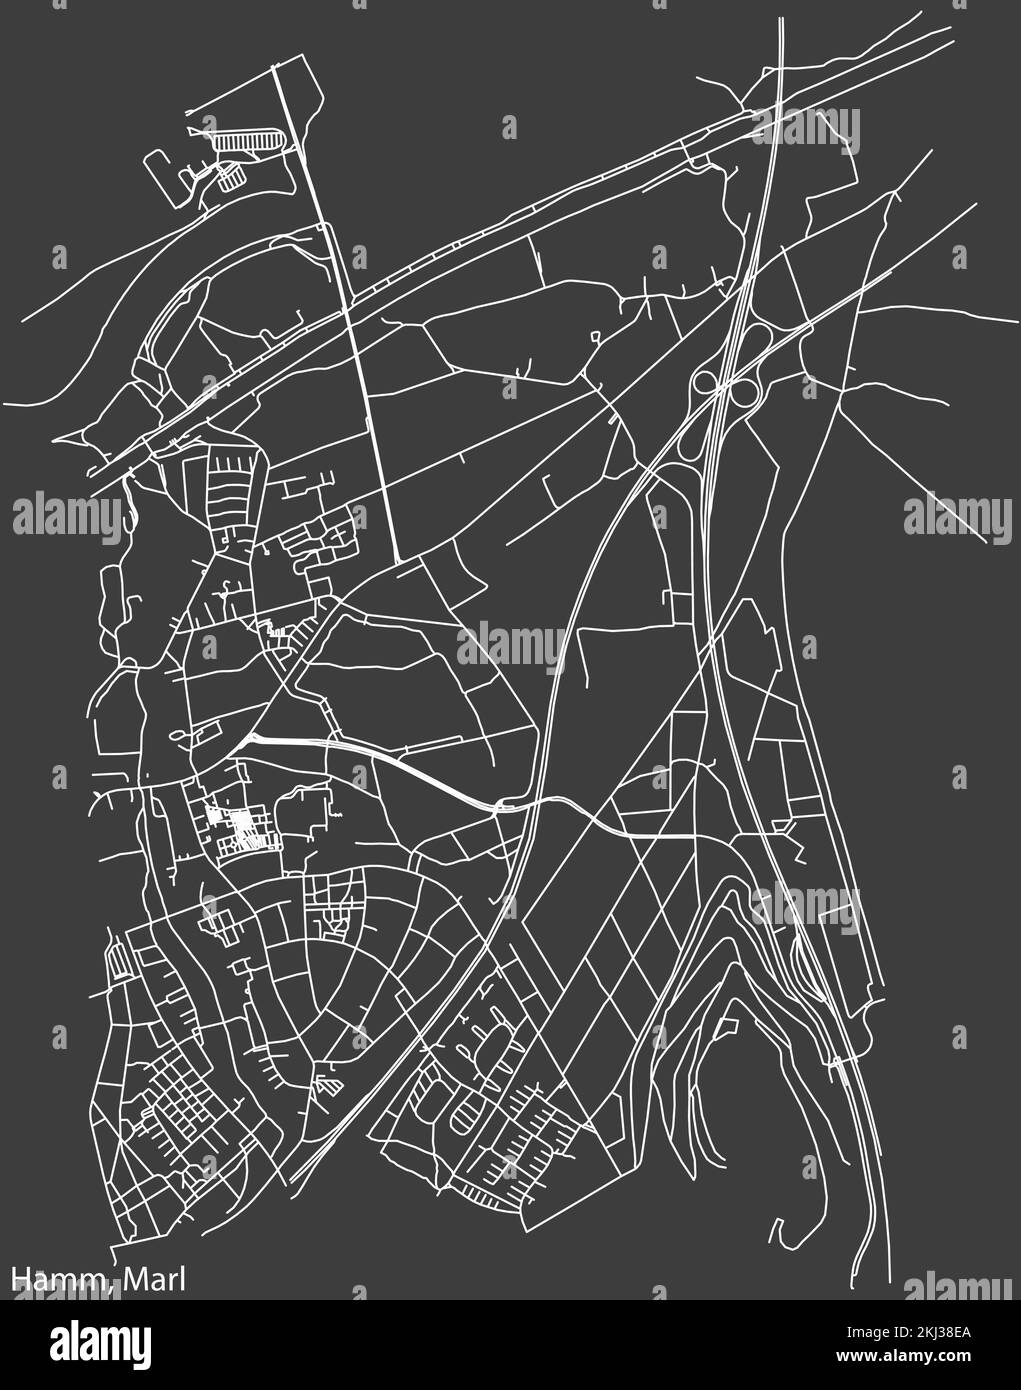 Street roads map of the HAMM MUNICIPALITY, MARL Stock Vector